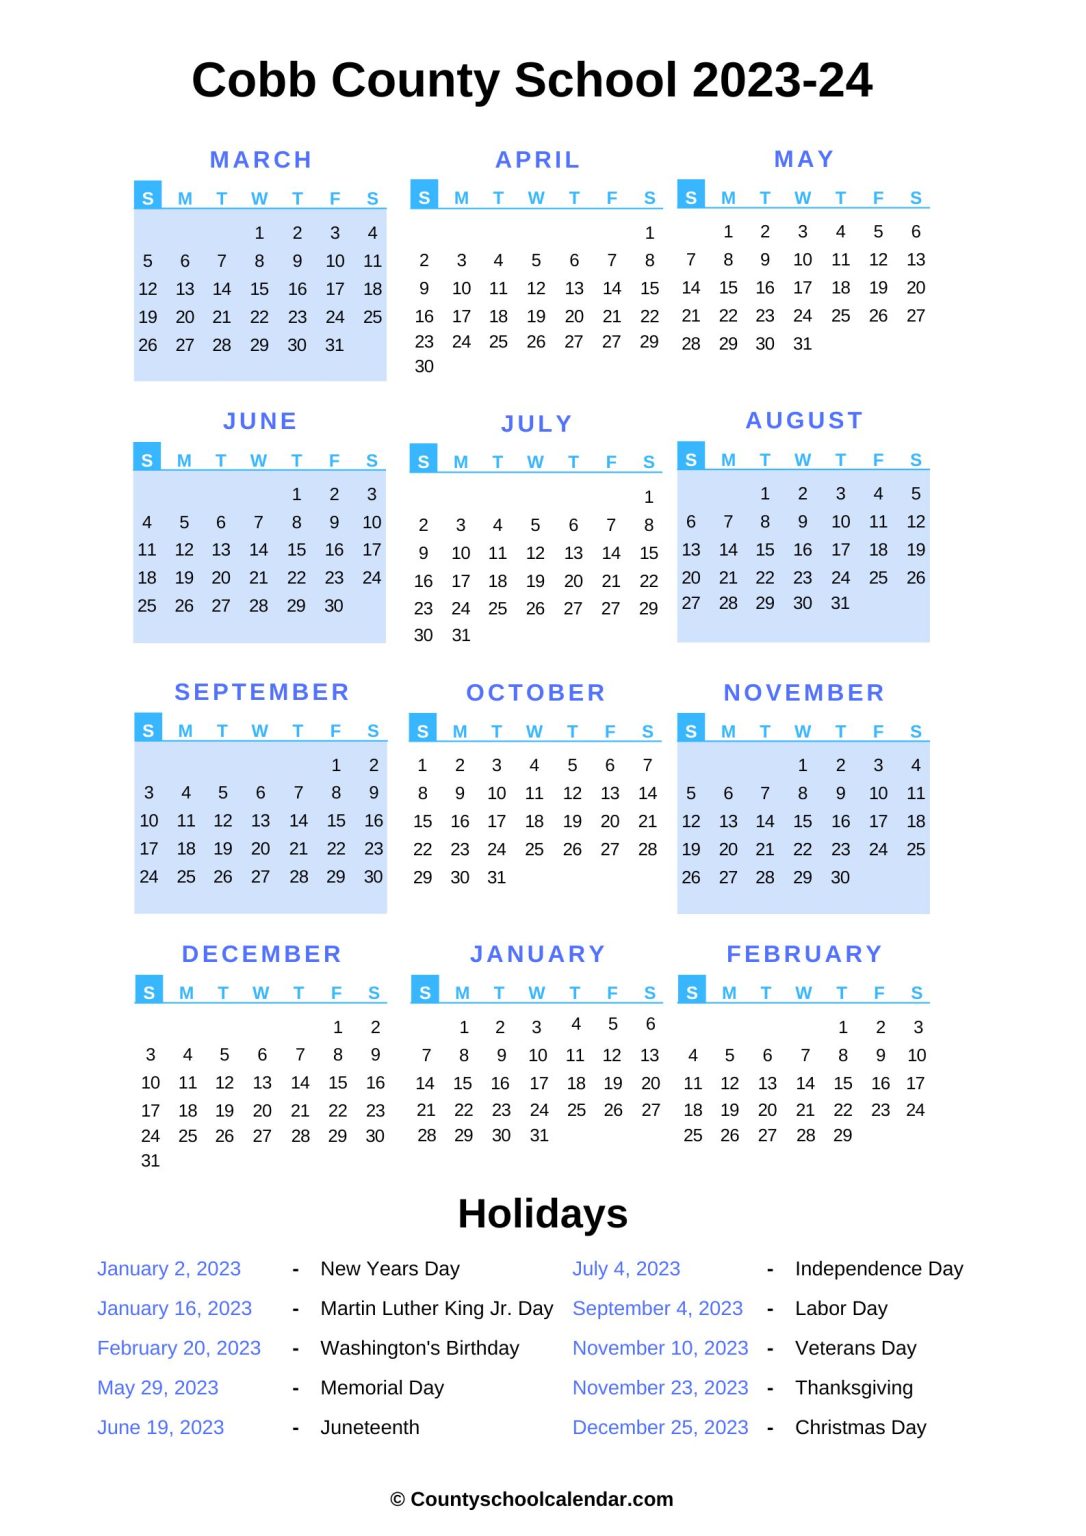 cobb-county-school-calendar-2022-23-with-holidays